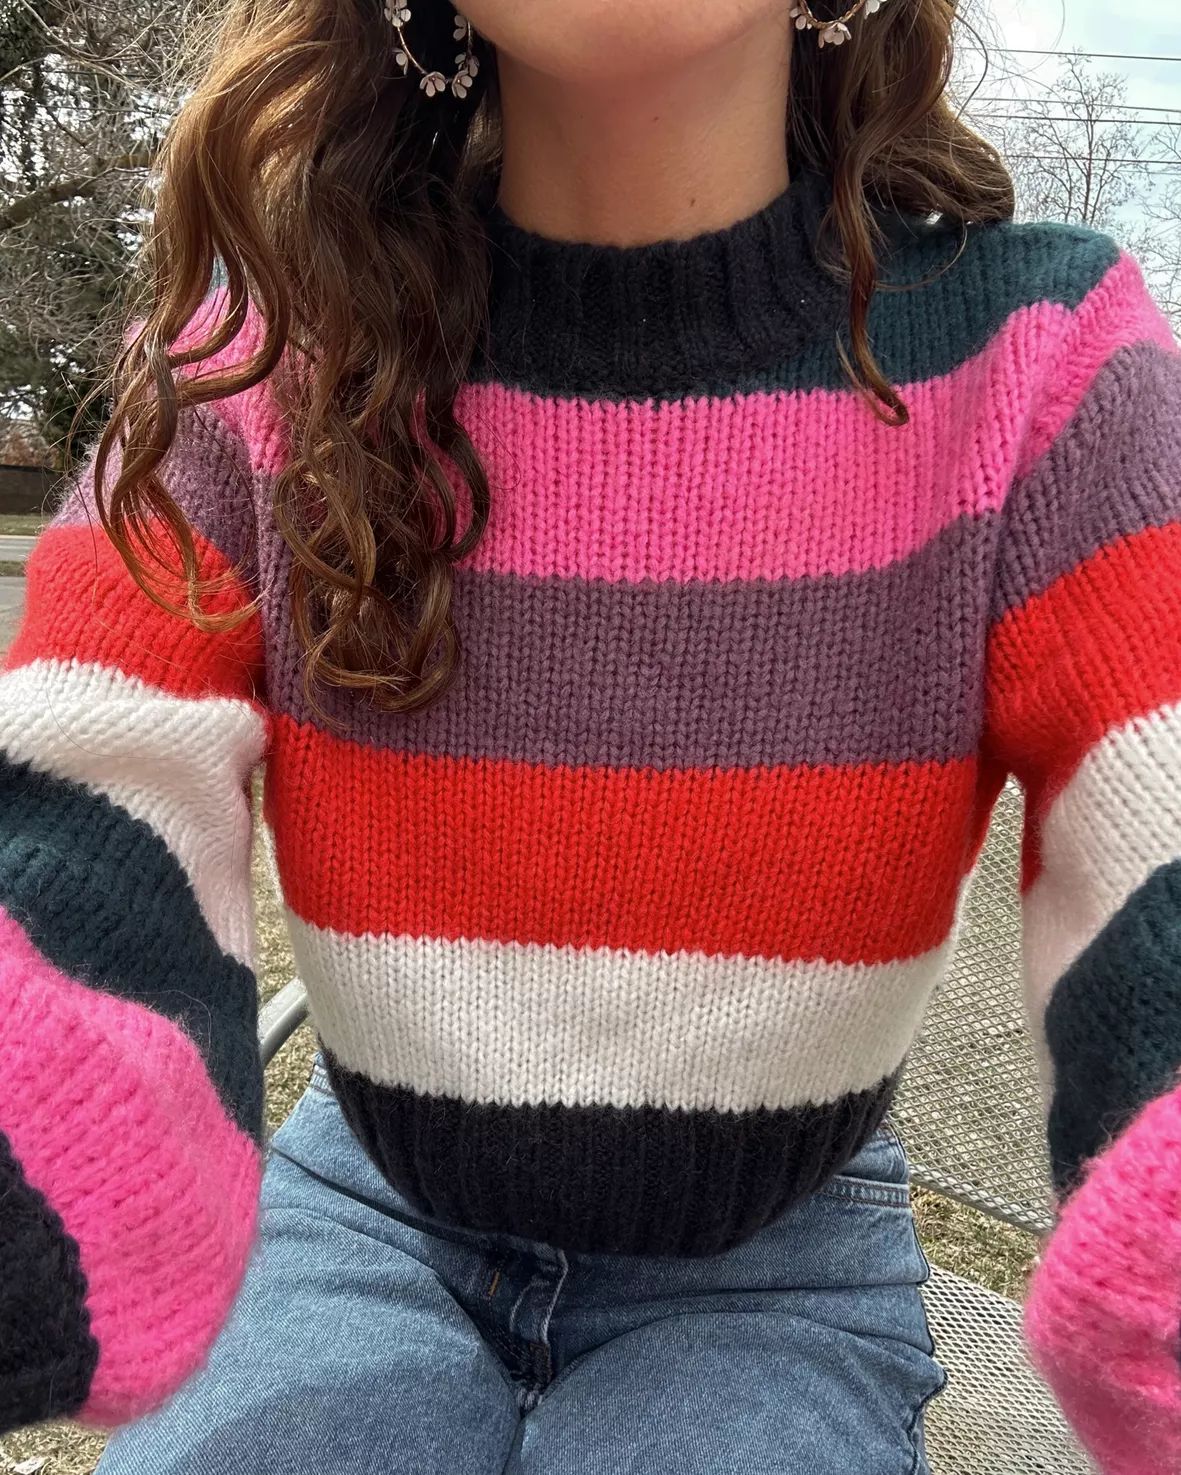 Knit Top for Women - Pink, Gigi